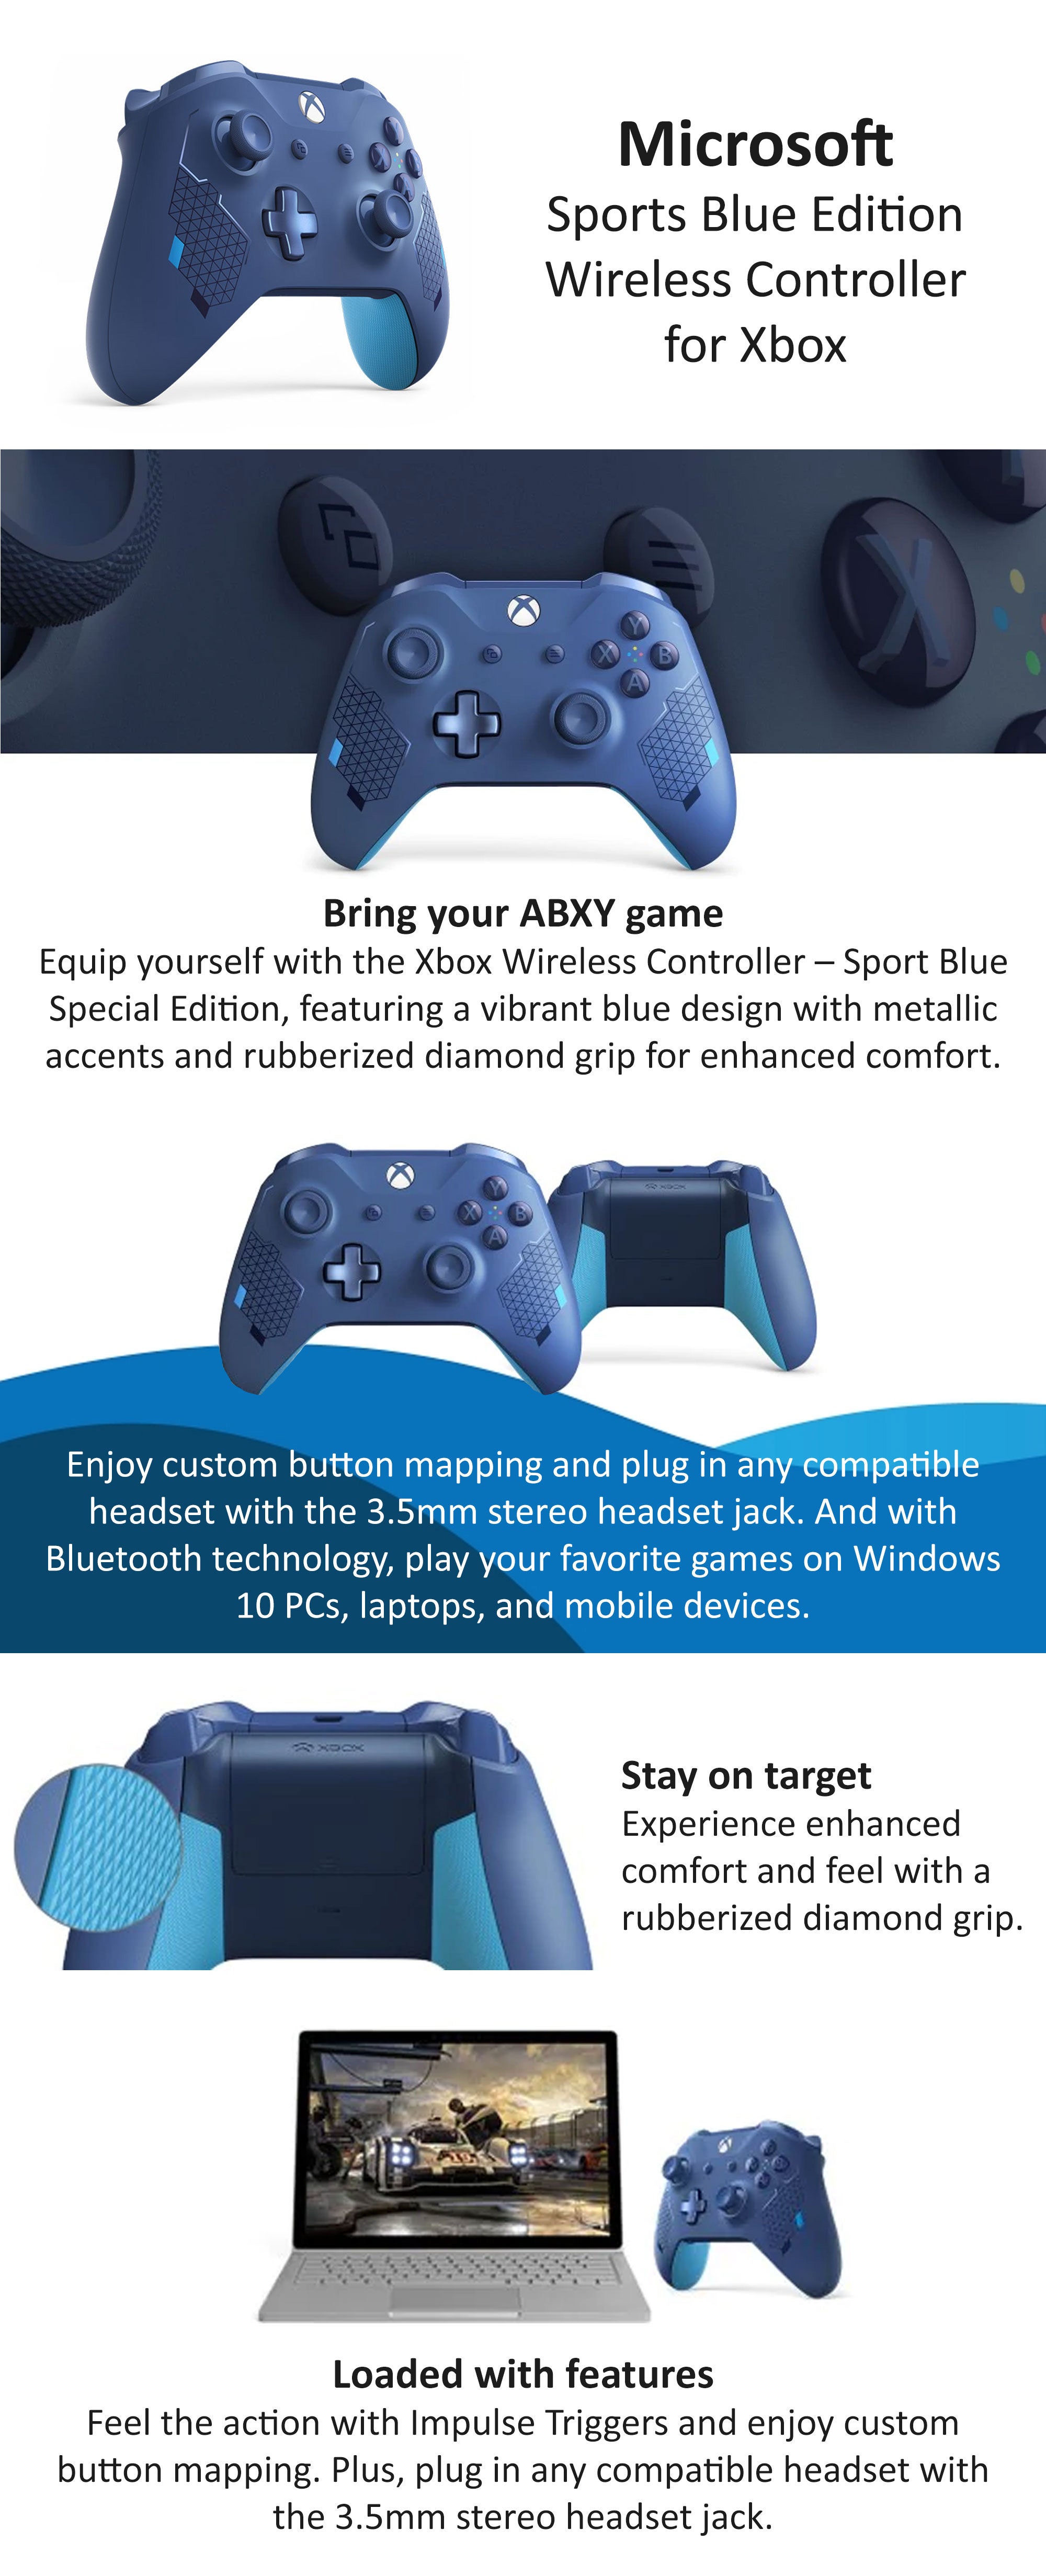 xbox one sport blue wireless controller